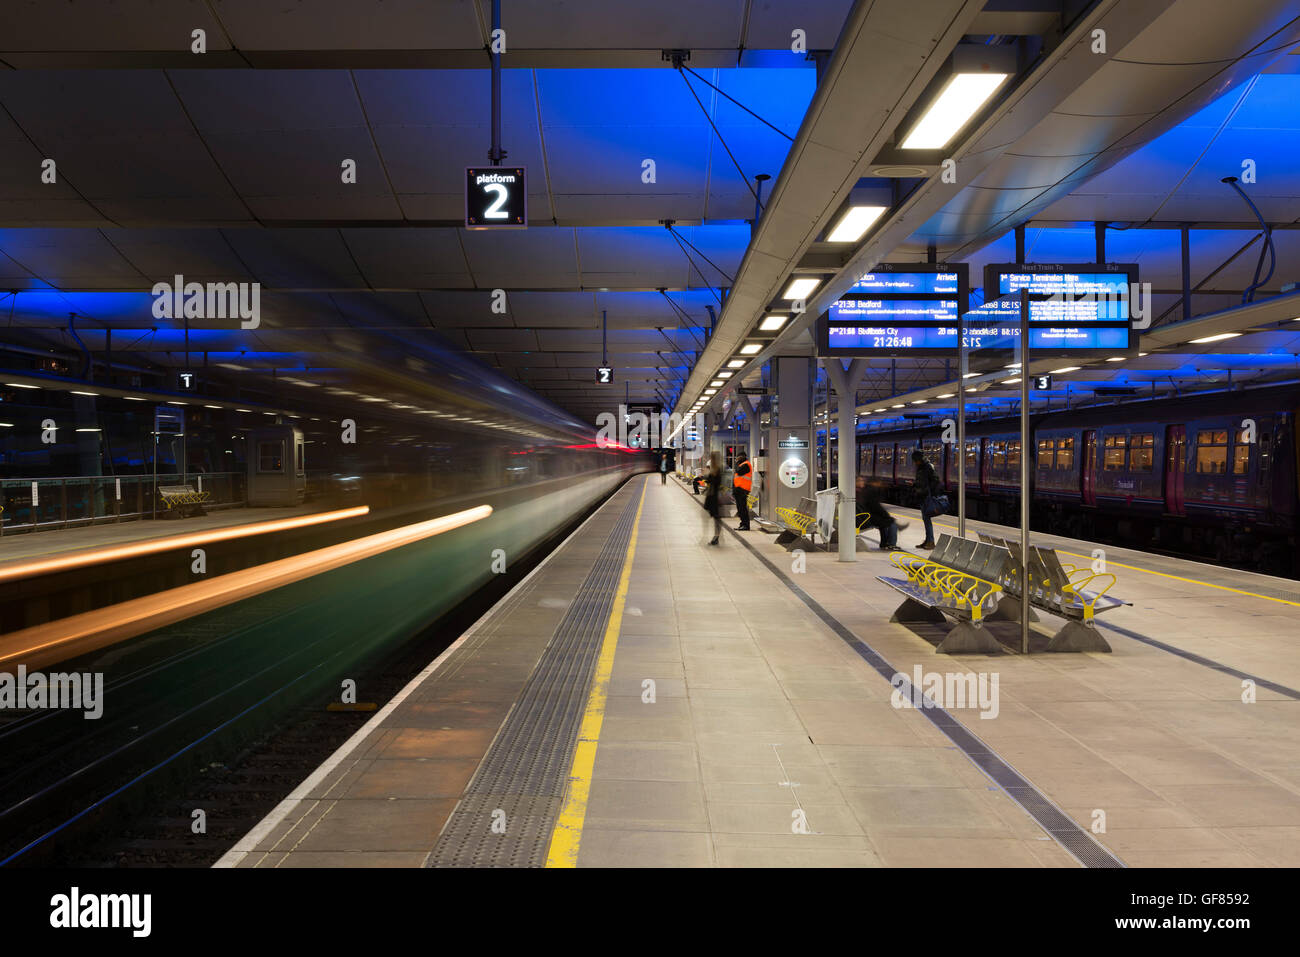 View along platform with train. Blackfriars Station, London, United Kingdom. Architect: Pascall+Watson architects Ltd, 2012. Stock Photo